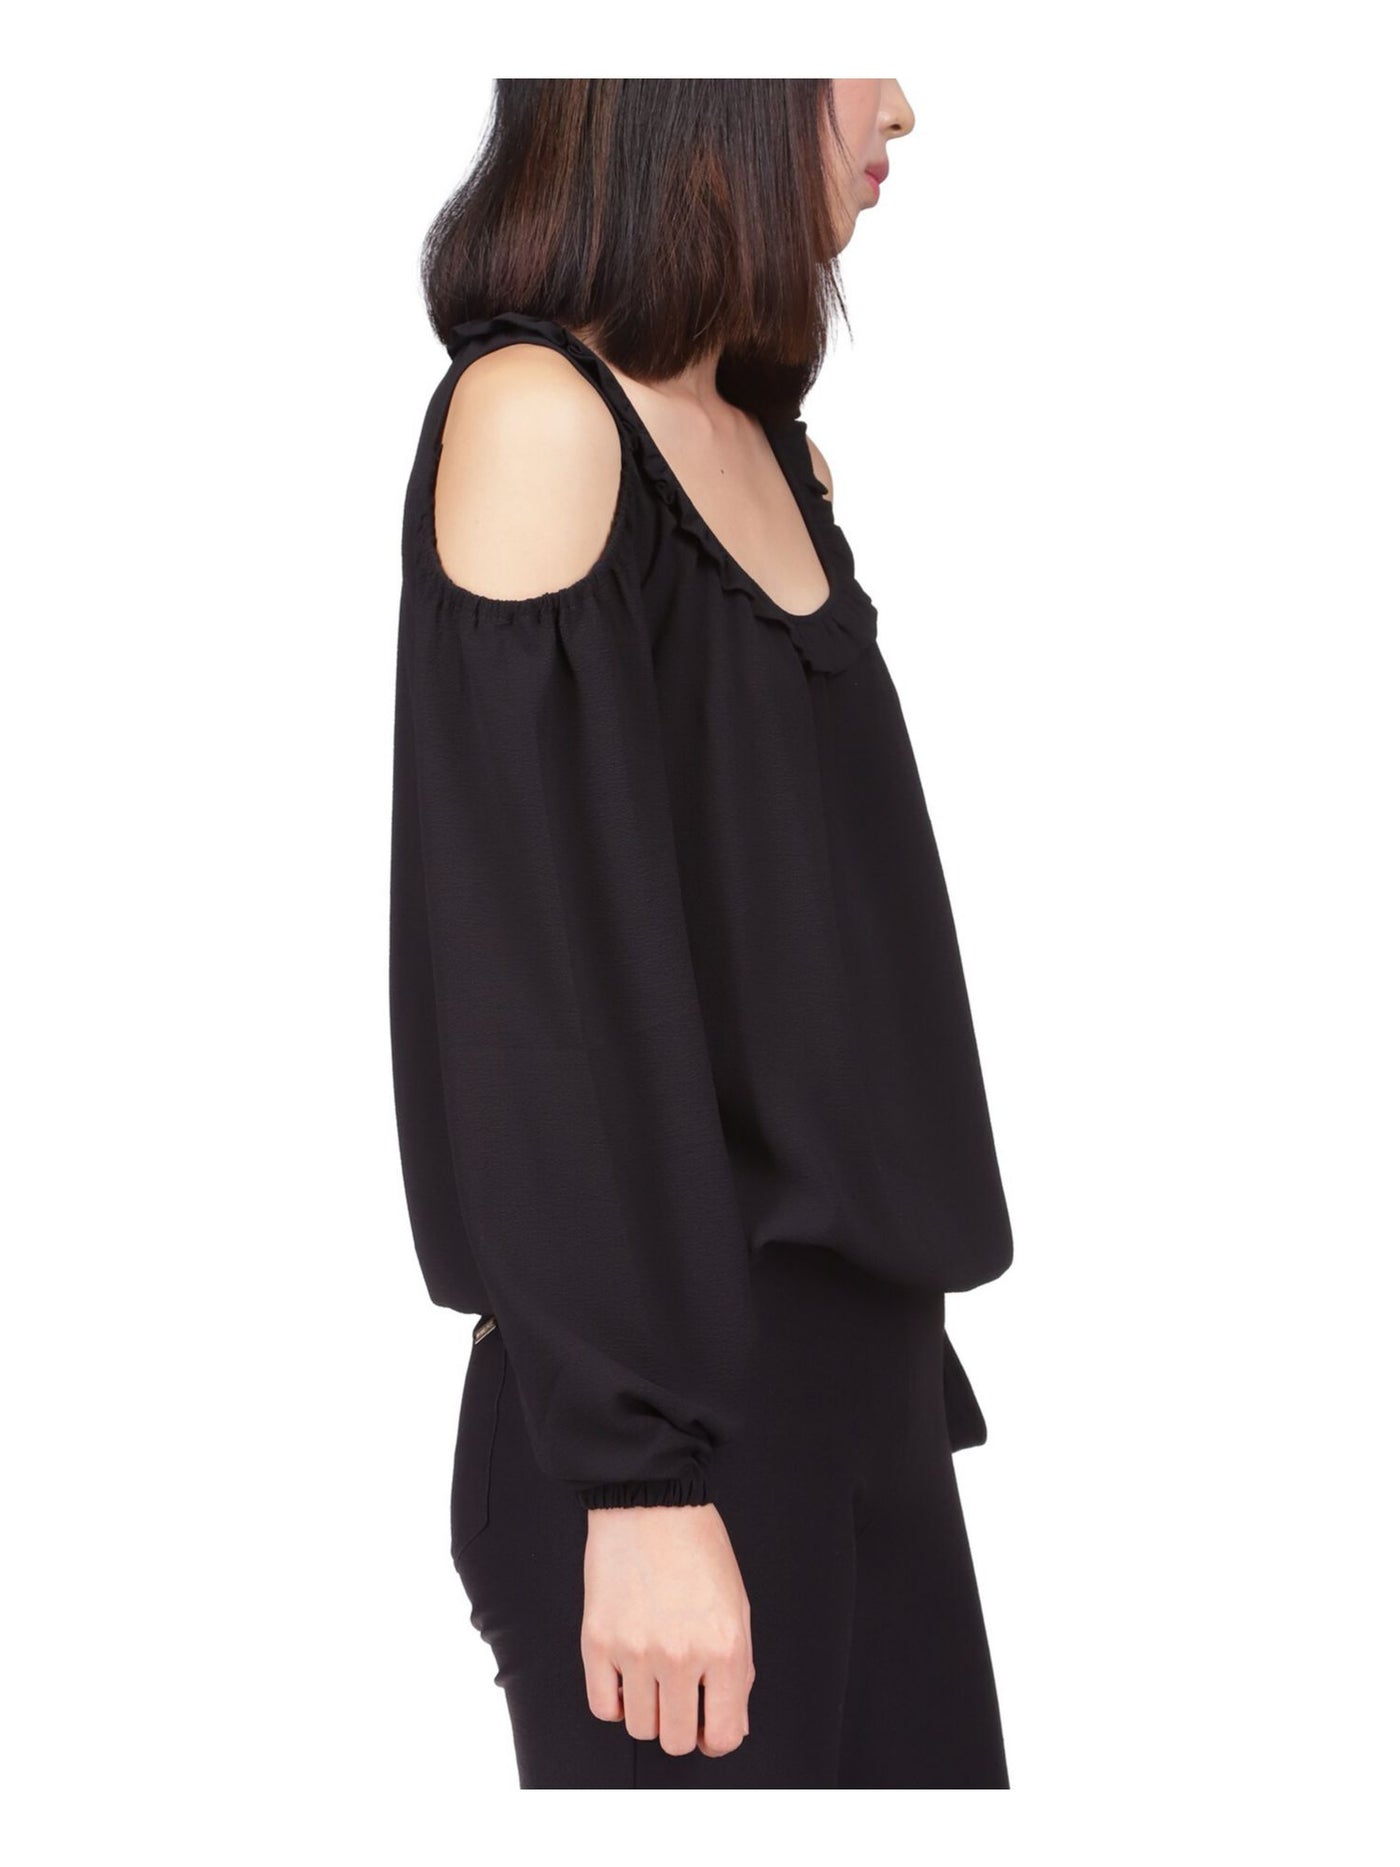 MICHAEL KORS Womens Black Cold Shoulder Ruffled Elastic Waist Tie Long Sleeve Round Neck Top XS